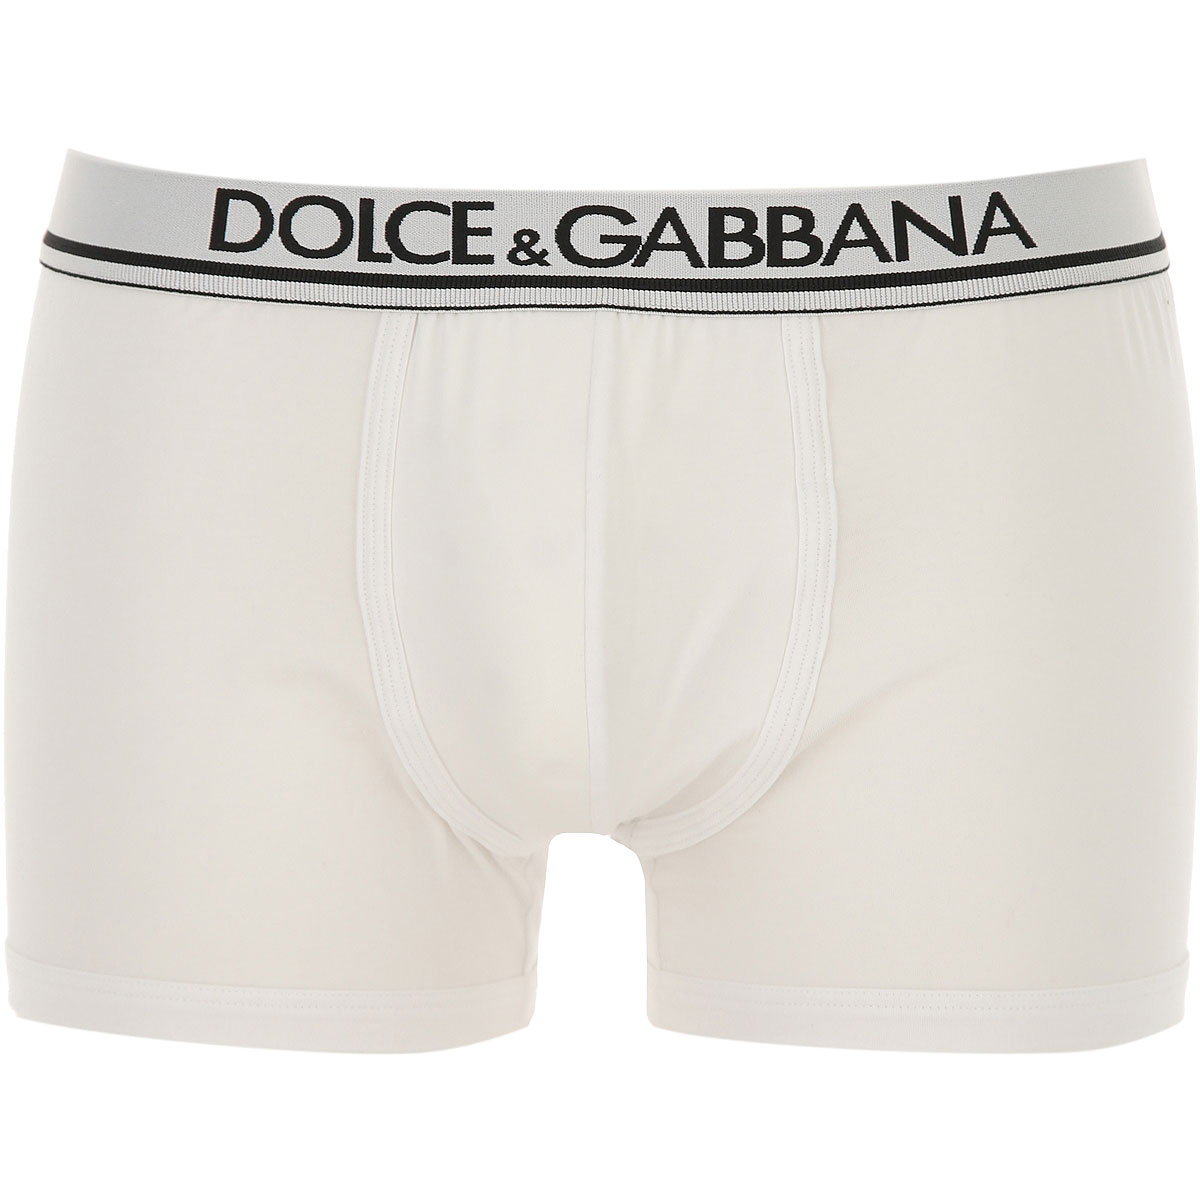 Mens Underwear Dolce & Gabbana, Style code: m4b65j-fueb0-w0800